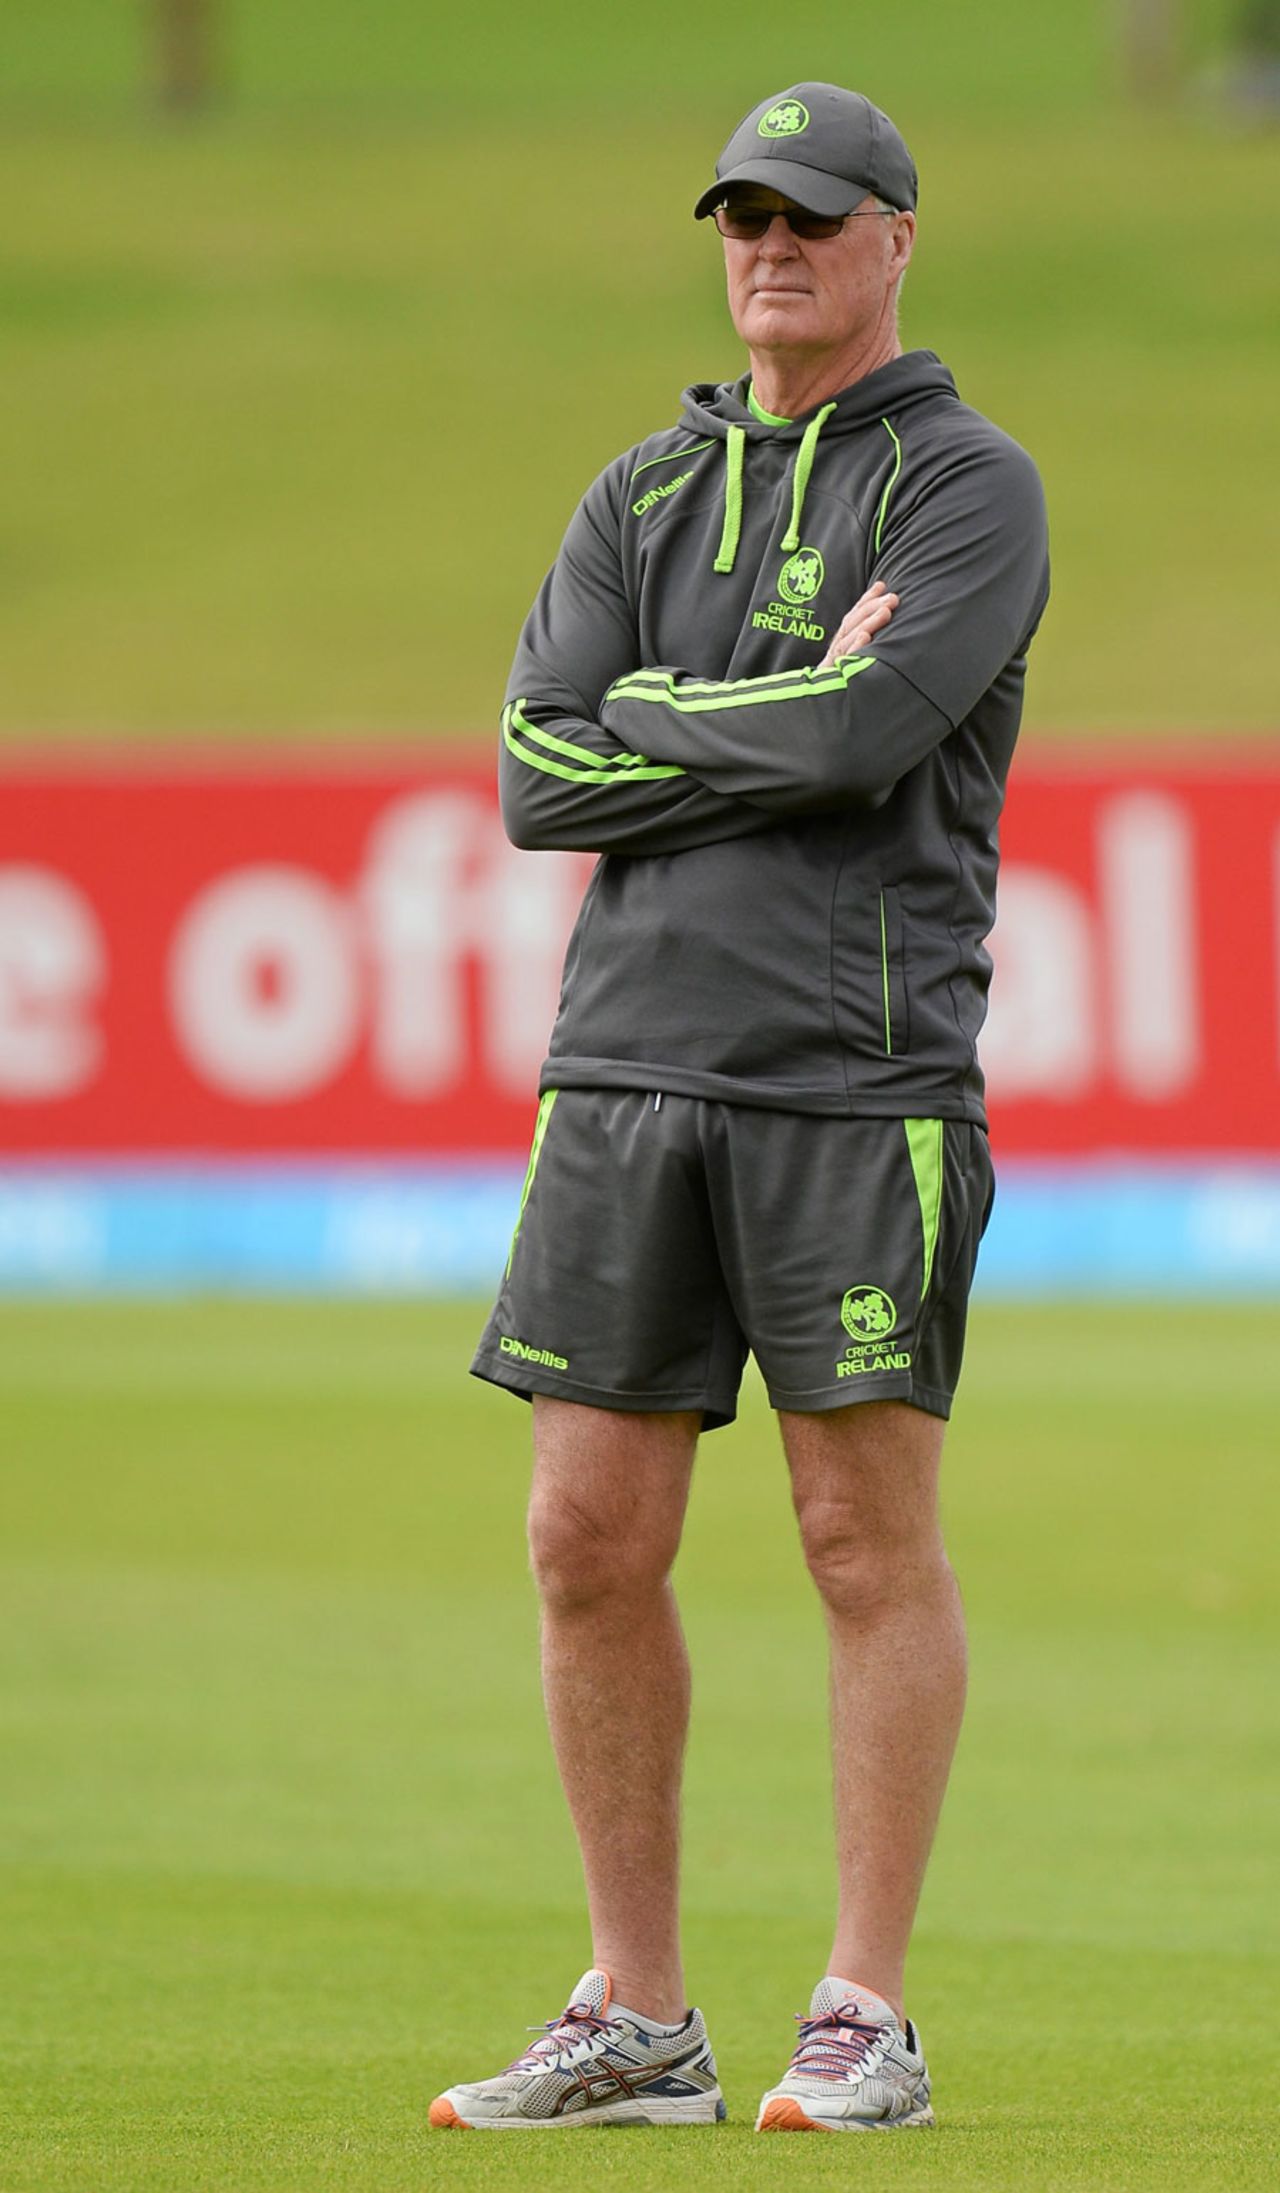 Ireland coach John Bracewell looks on during a training session, Ireland v Jersey, World T20 Qualifier, July 19, 2015